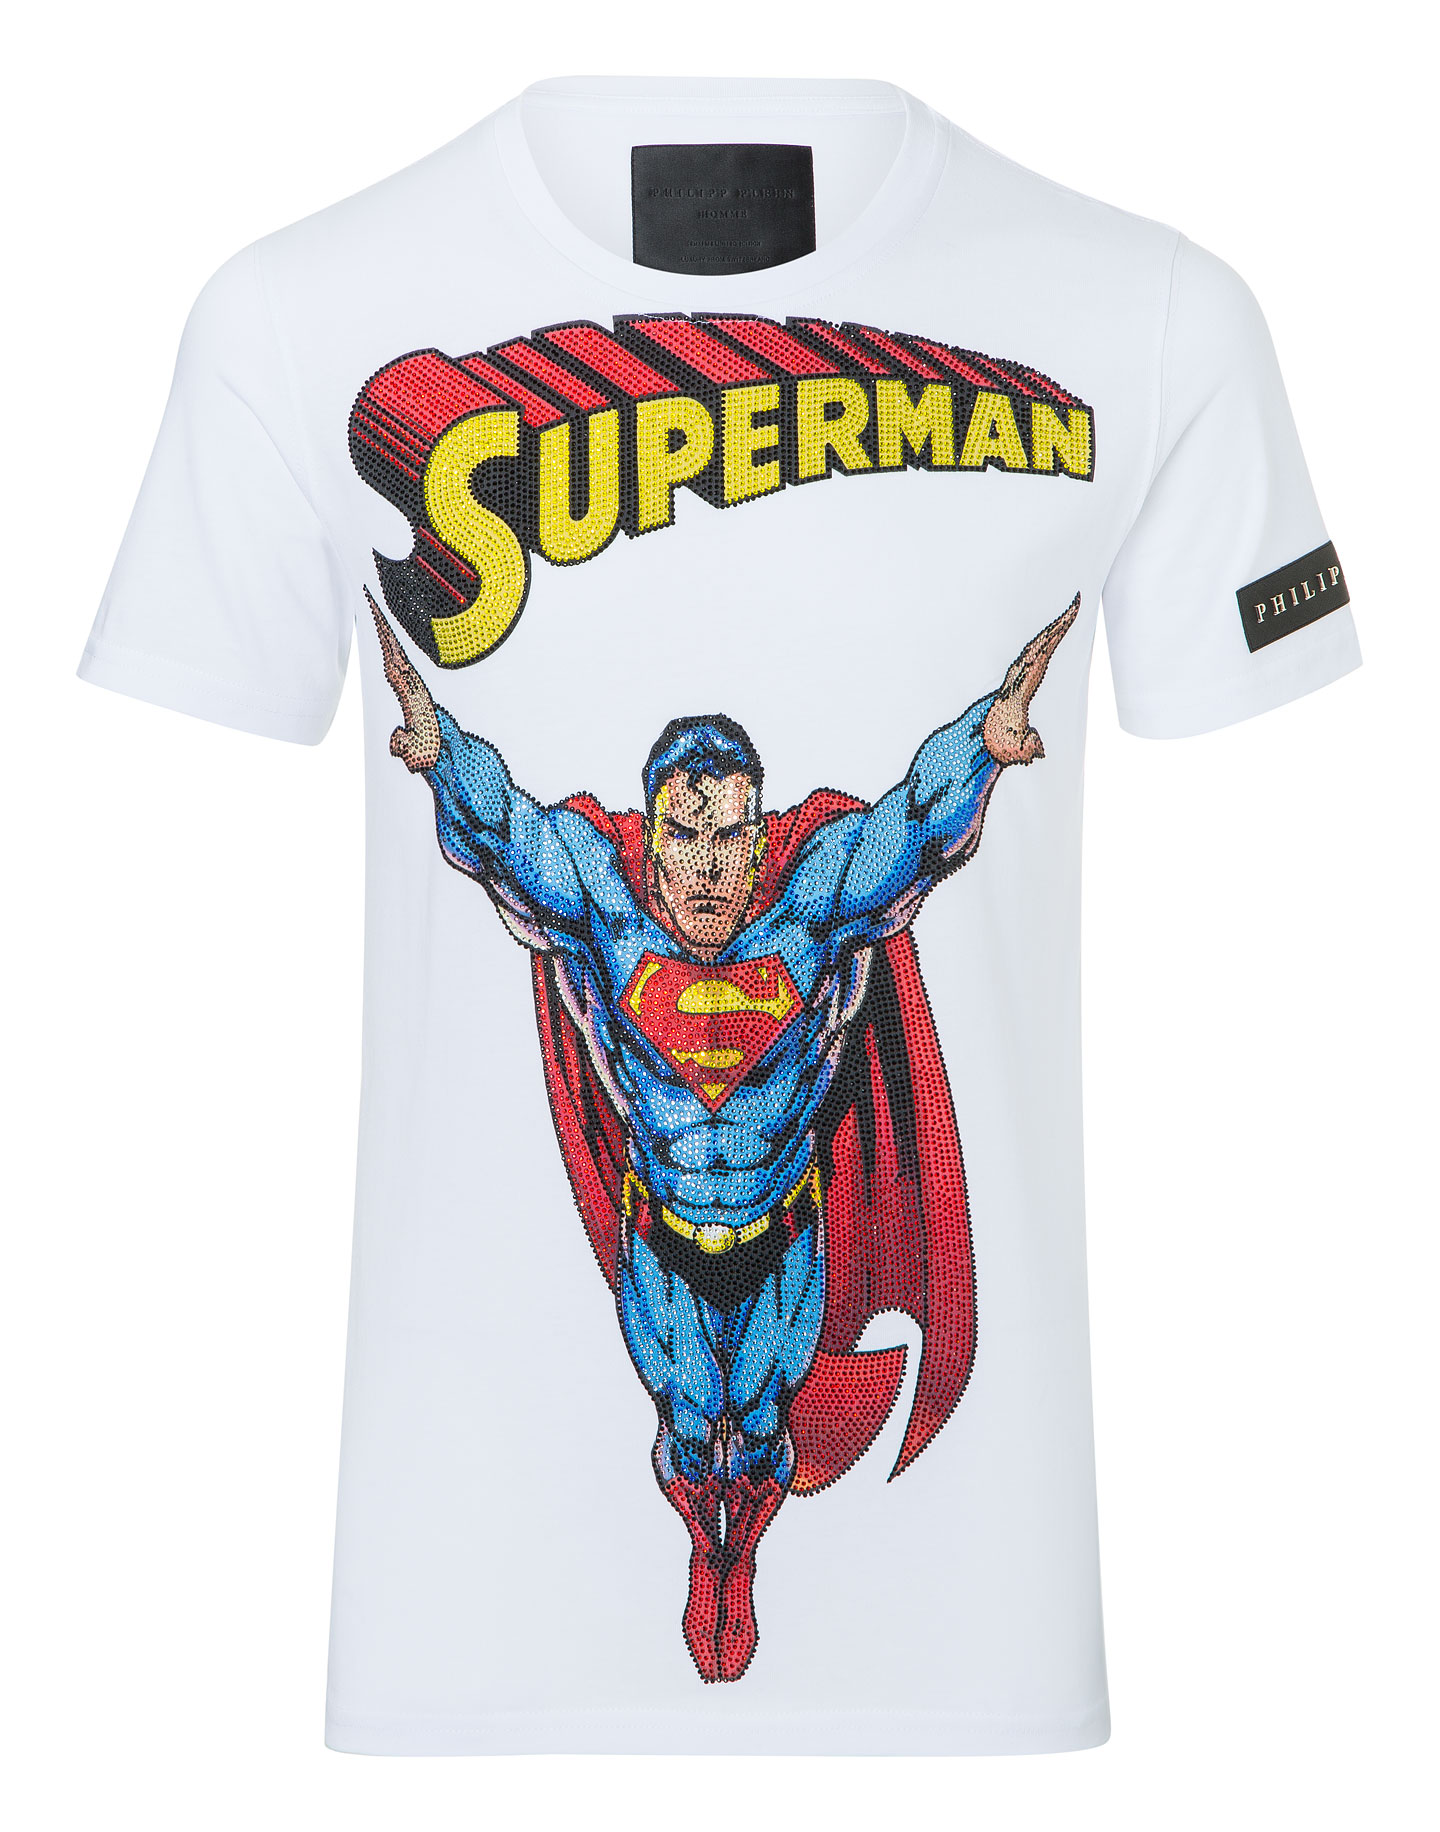 philipp plein superman t shirt